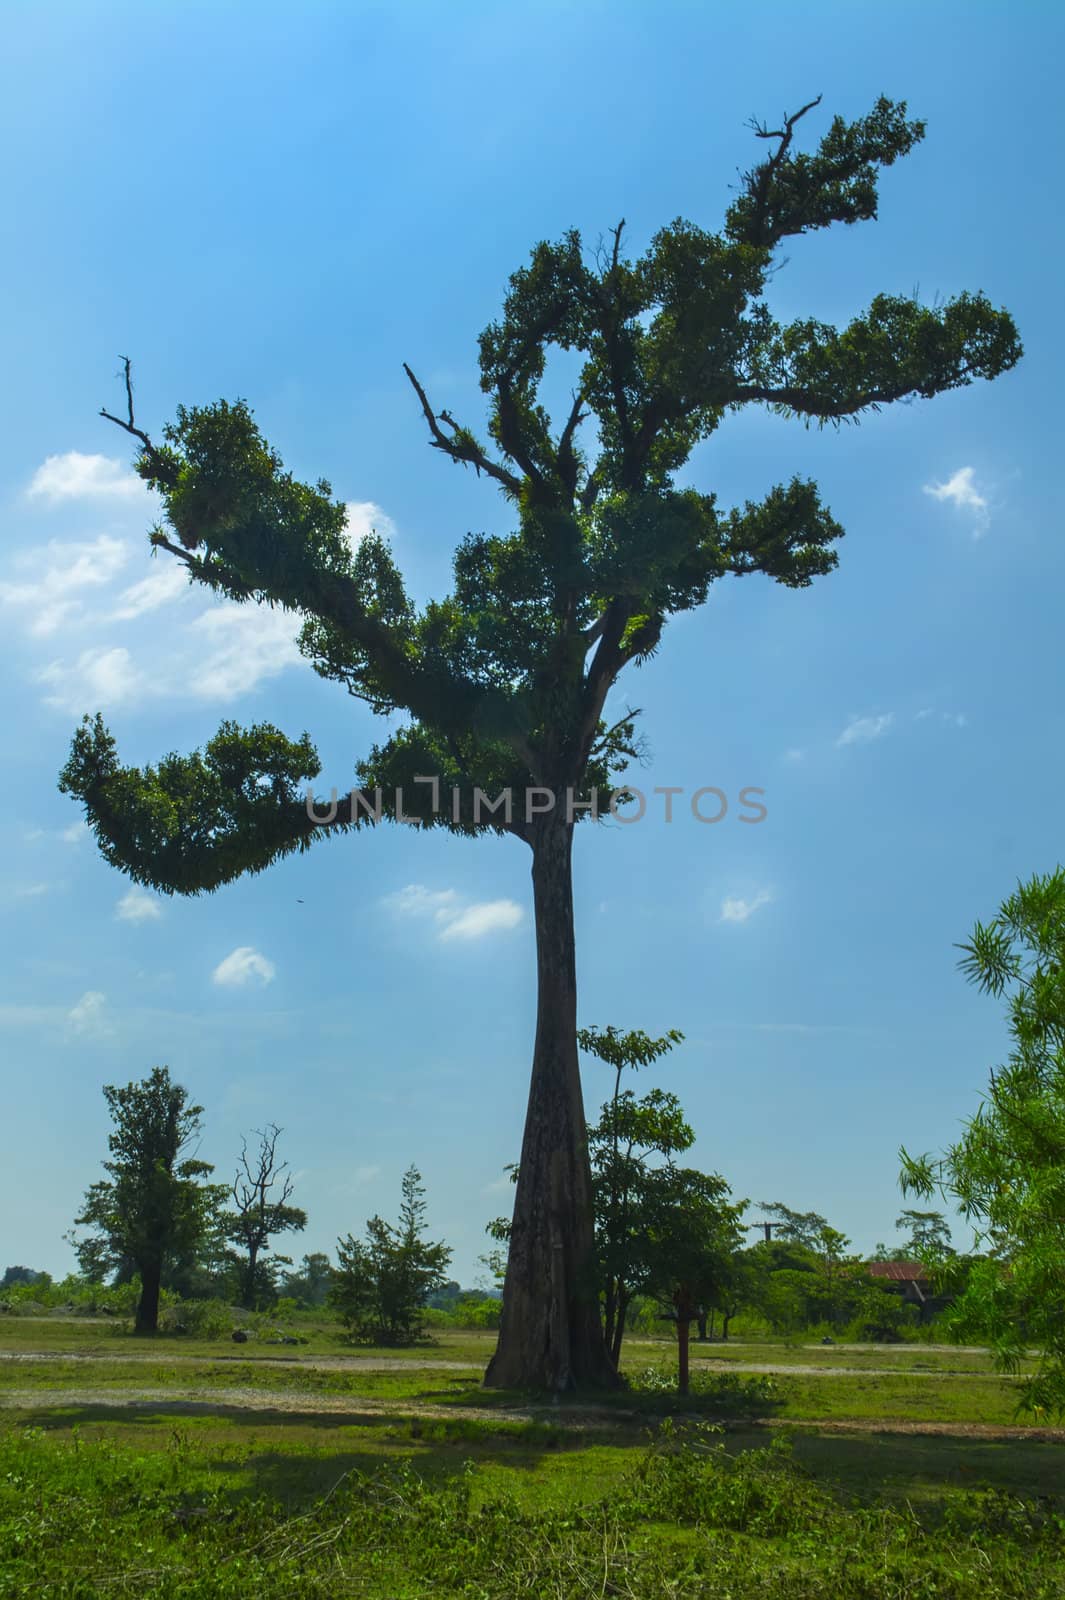 Tree located 8 km northeast of Thakhek. Laos.